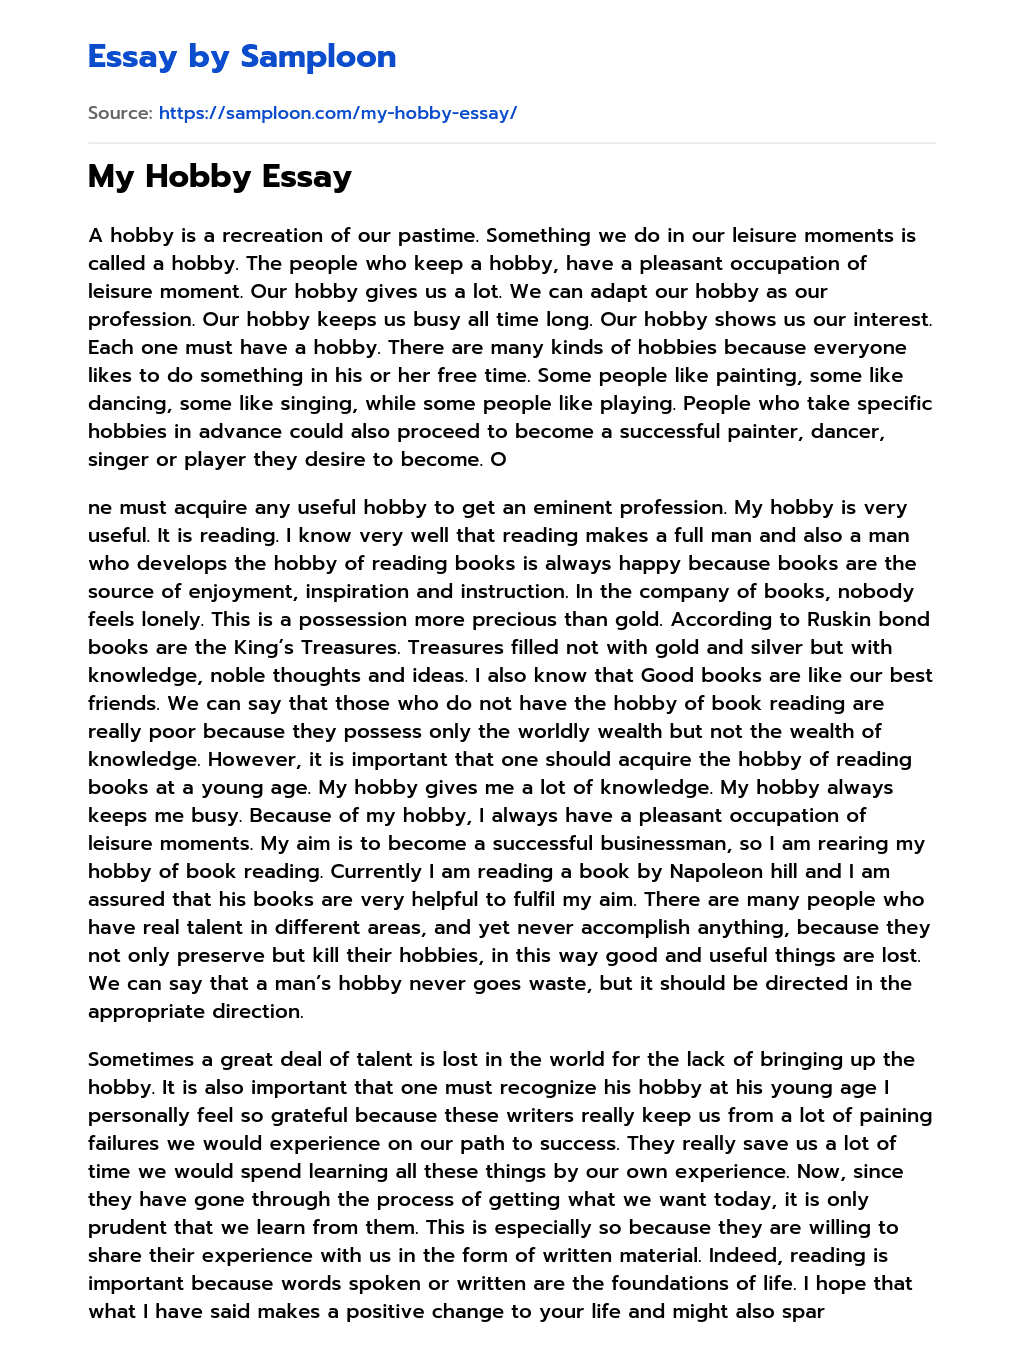 my hobby essay 150 words pdf